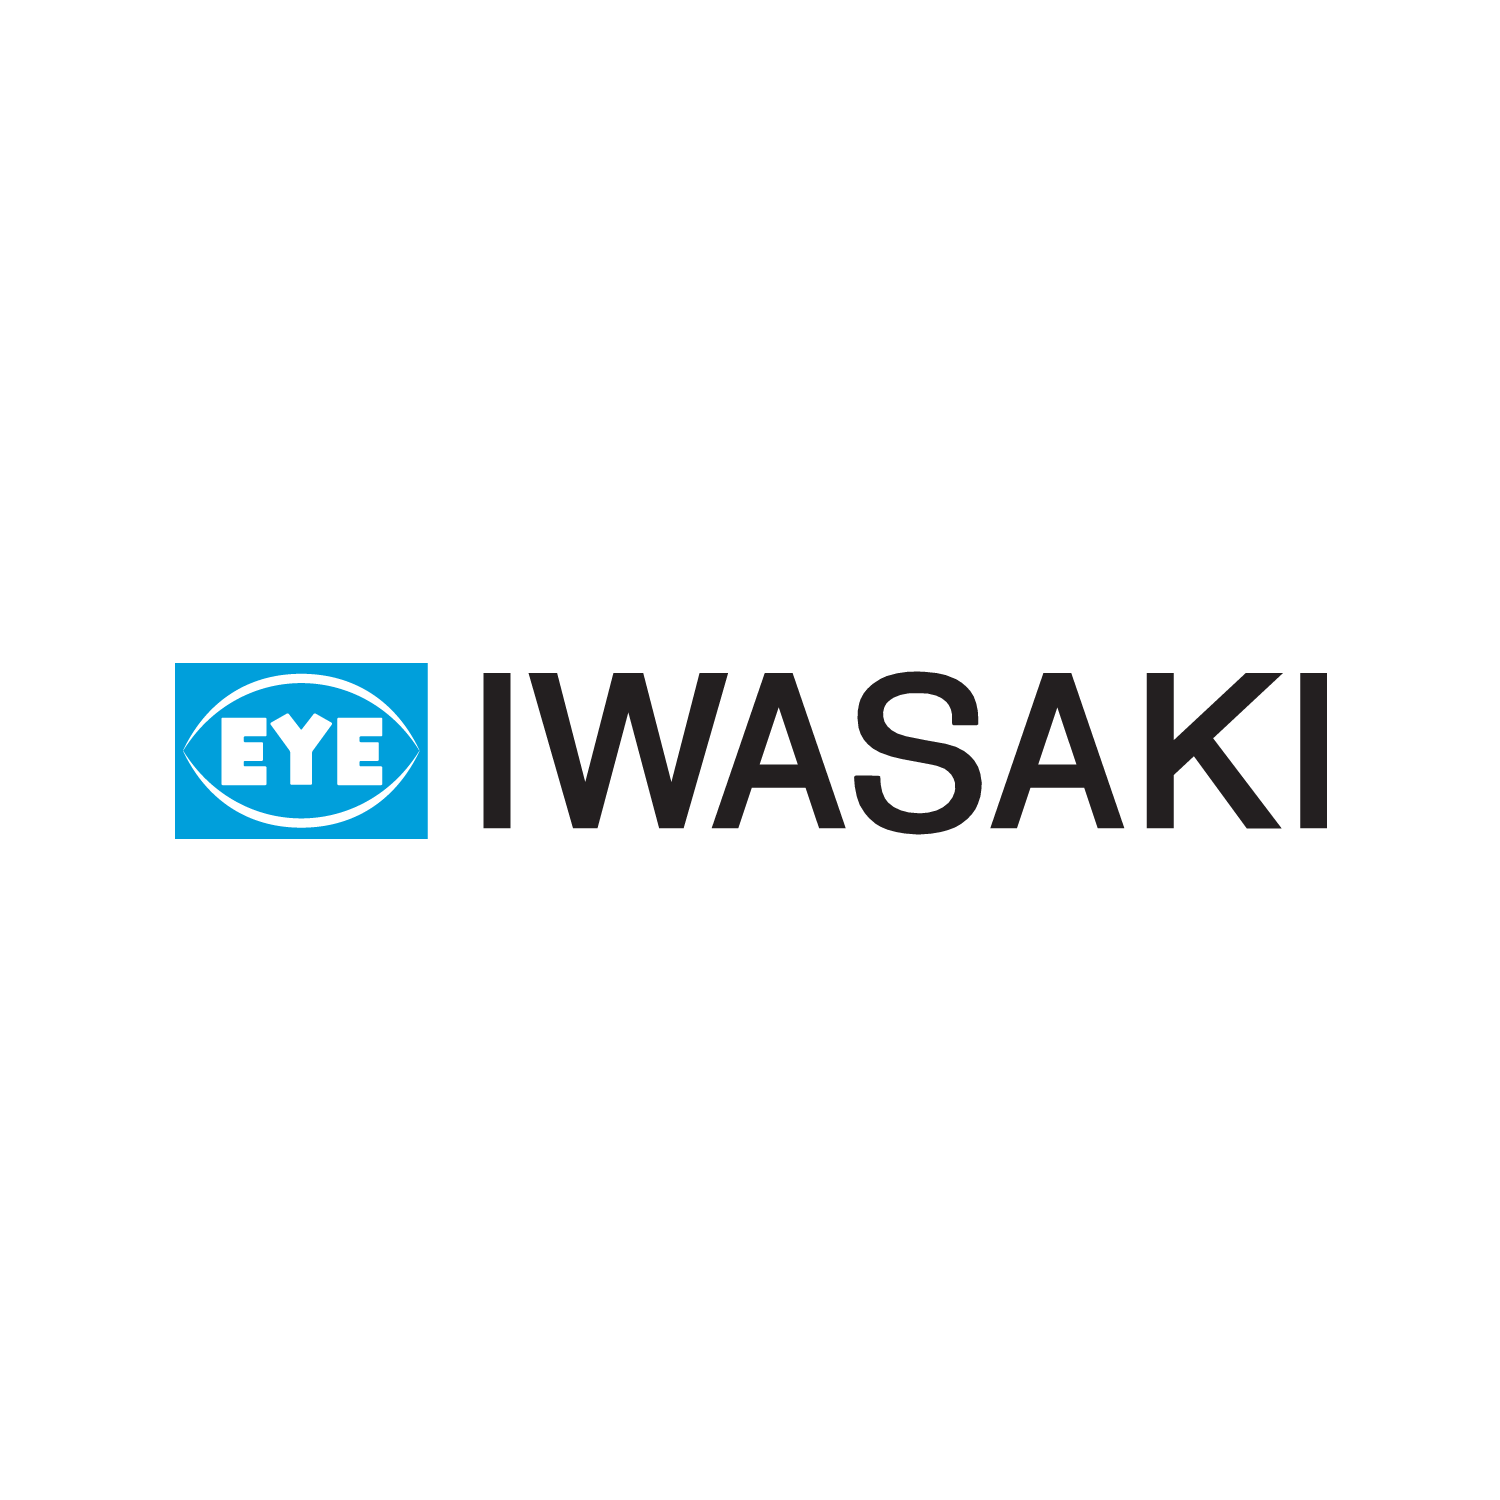 LED照明・ランプ・光環境技術のIWASAKI - 岩崎電気株式会社